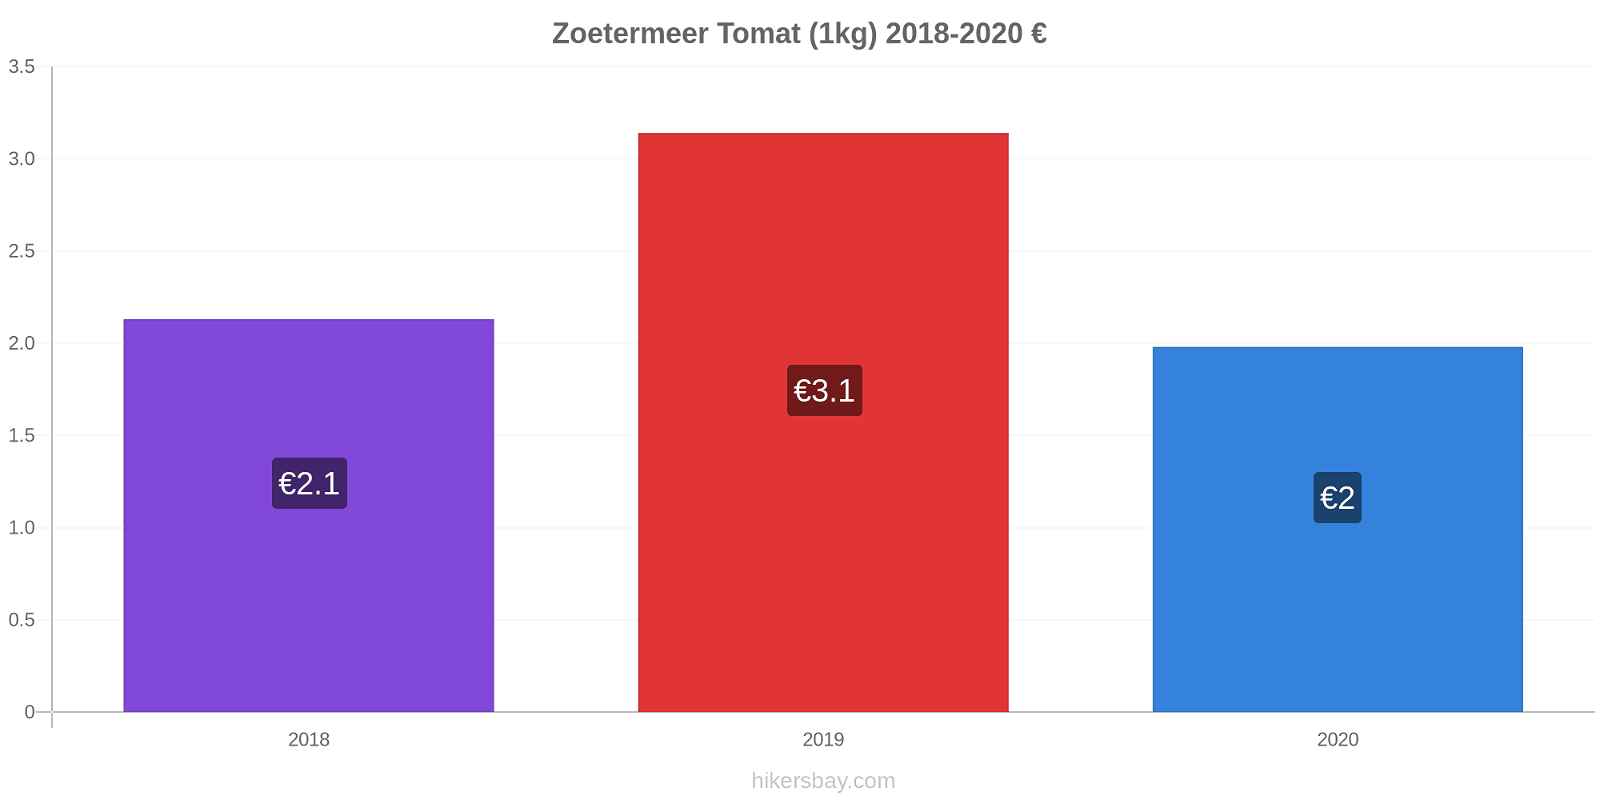 Zoetermeer prisændringer Tomat (1kg) hikersbay.com